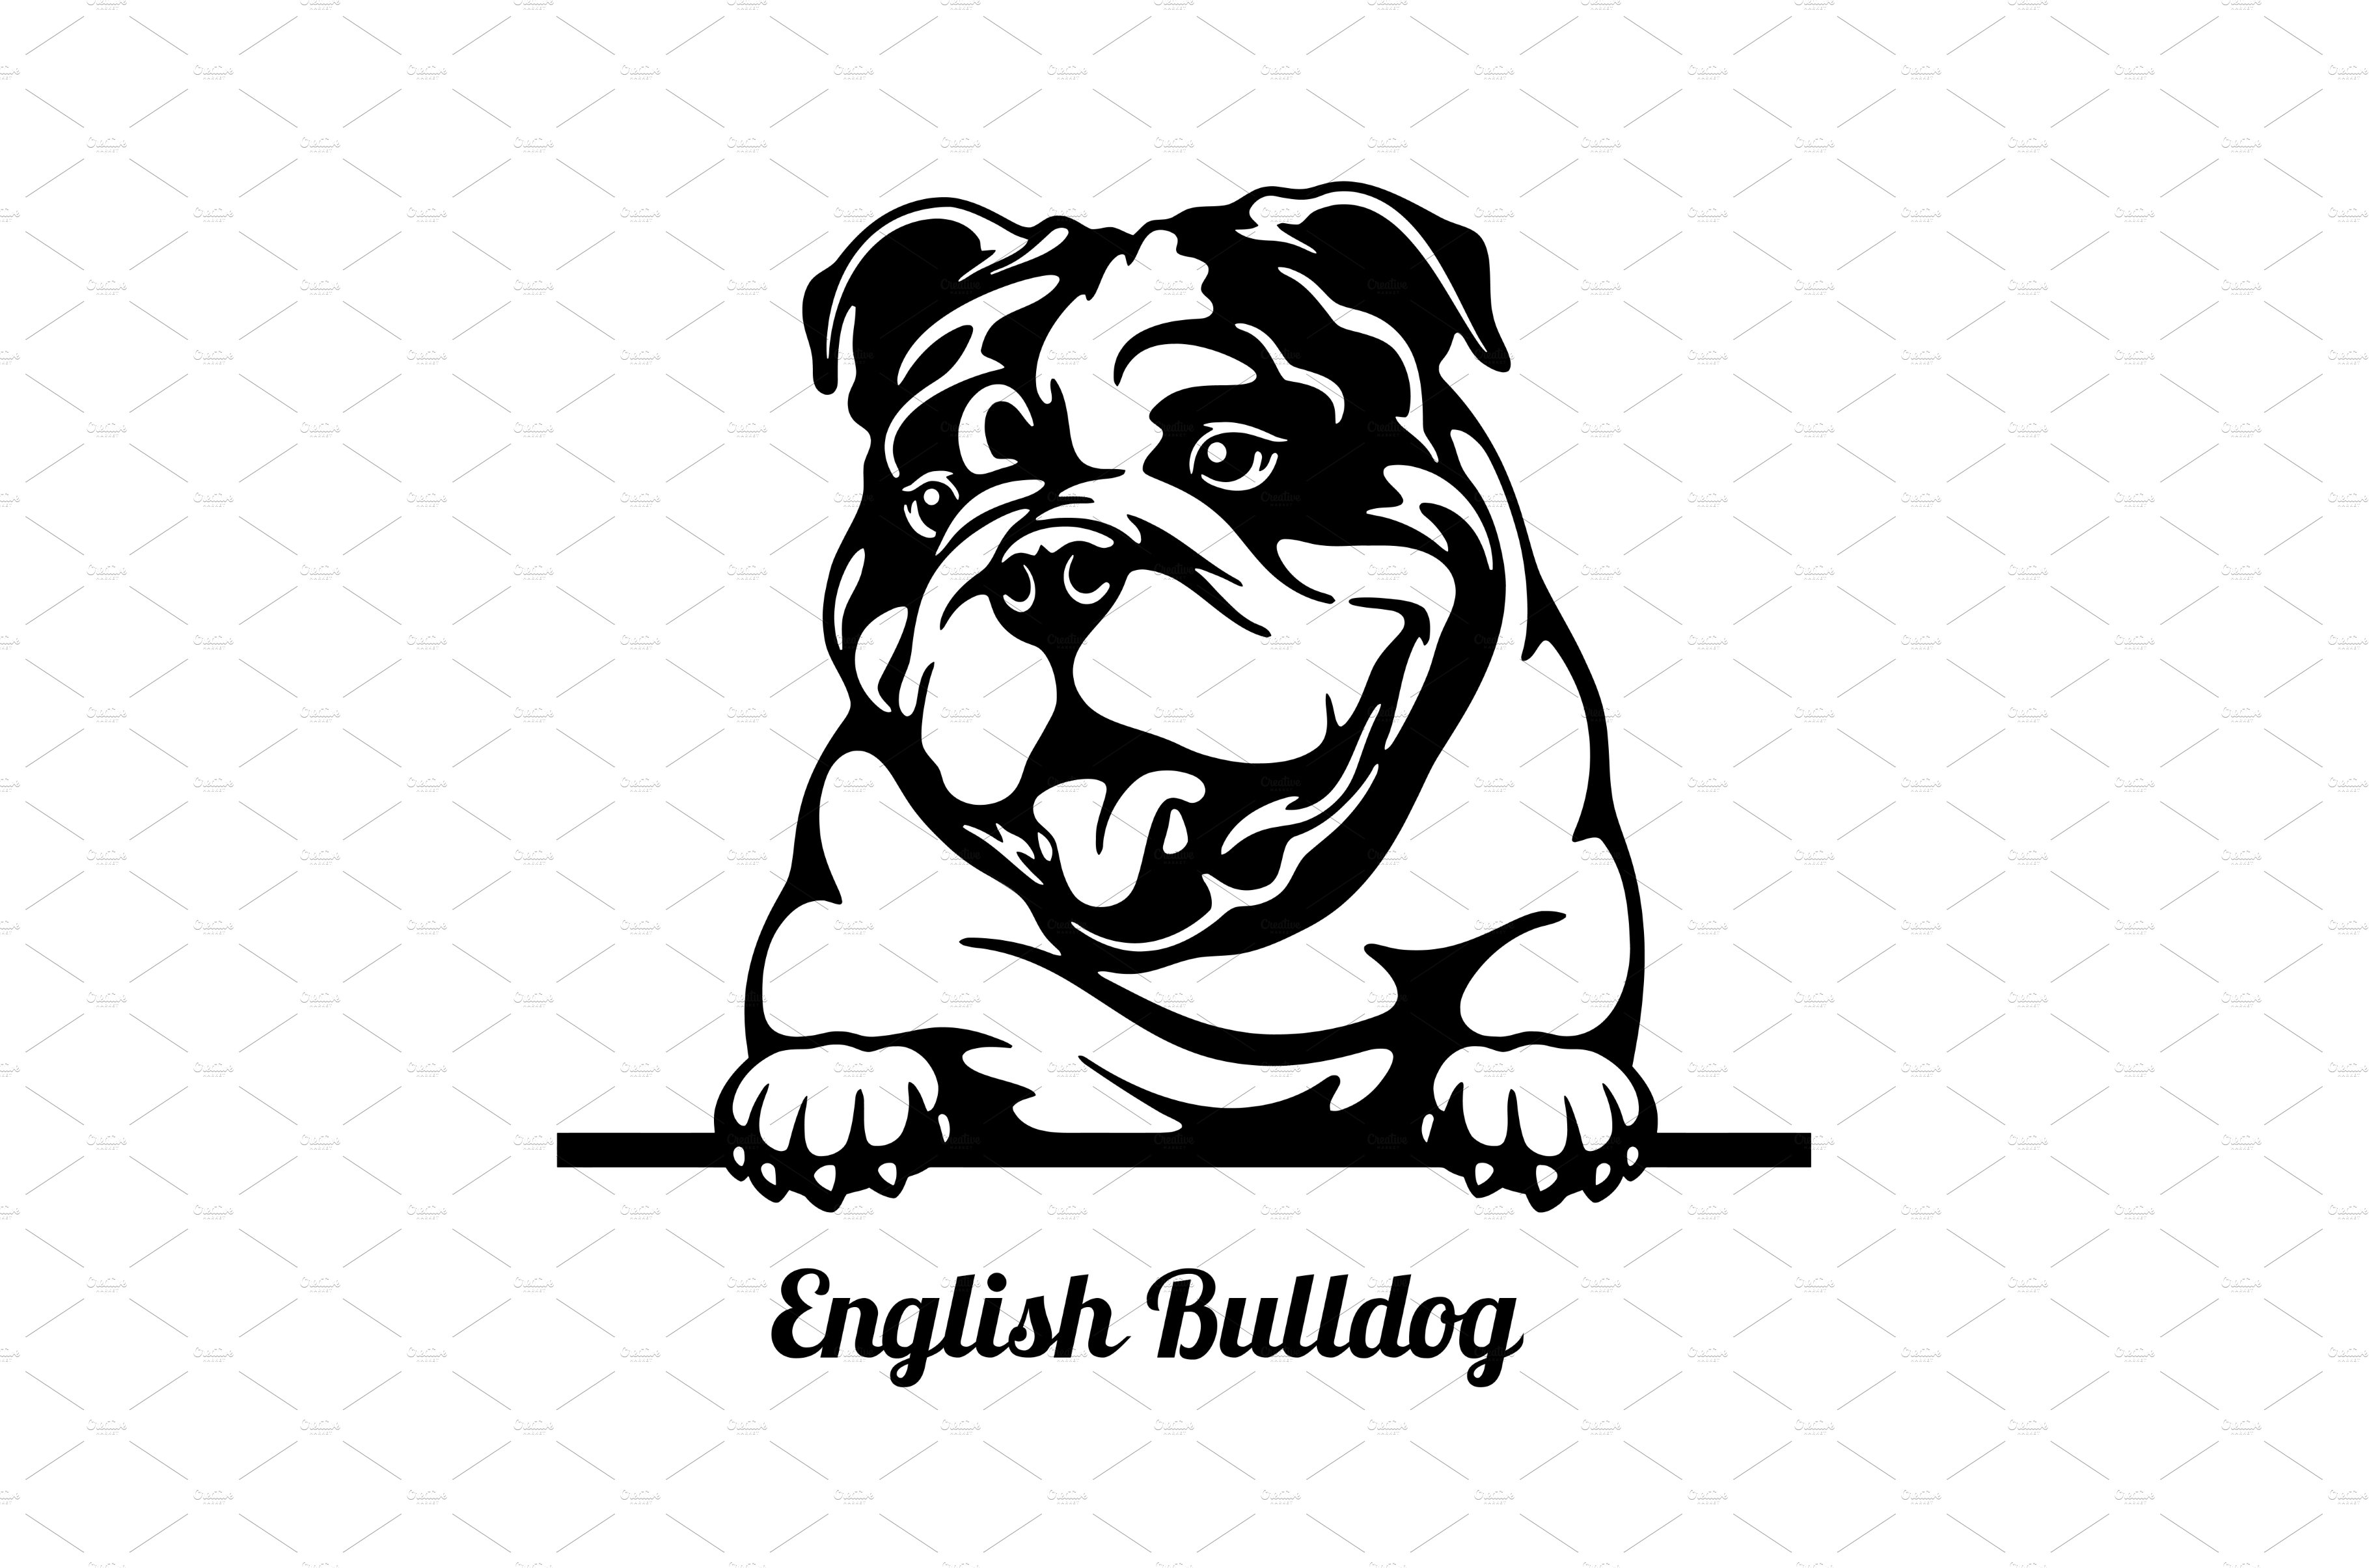 English Bulldog Peeking Dog - head cover image.